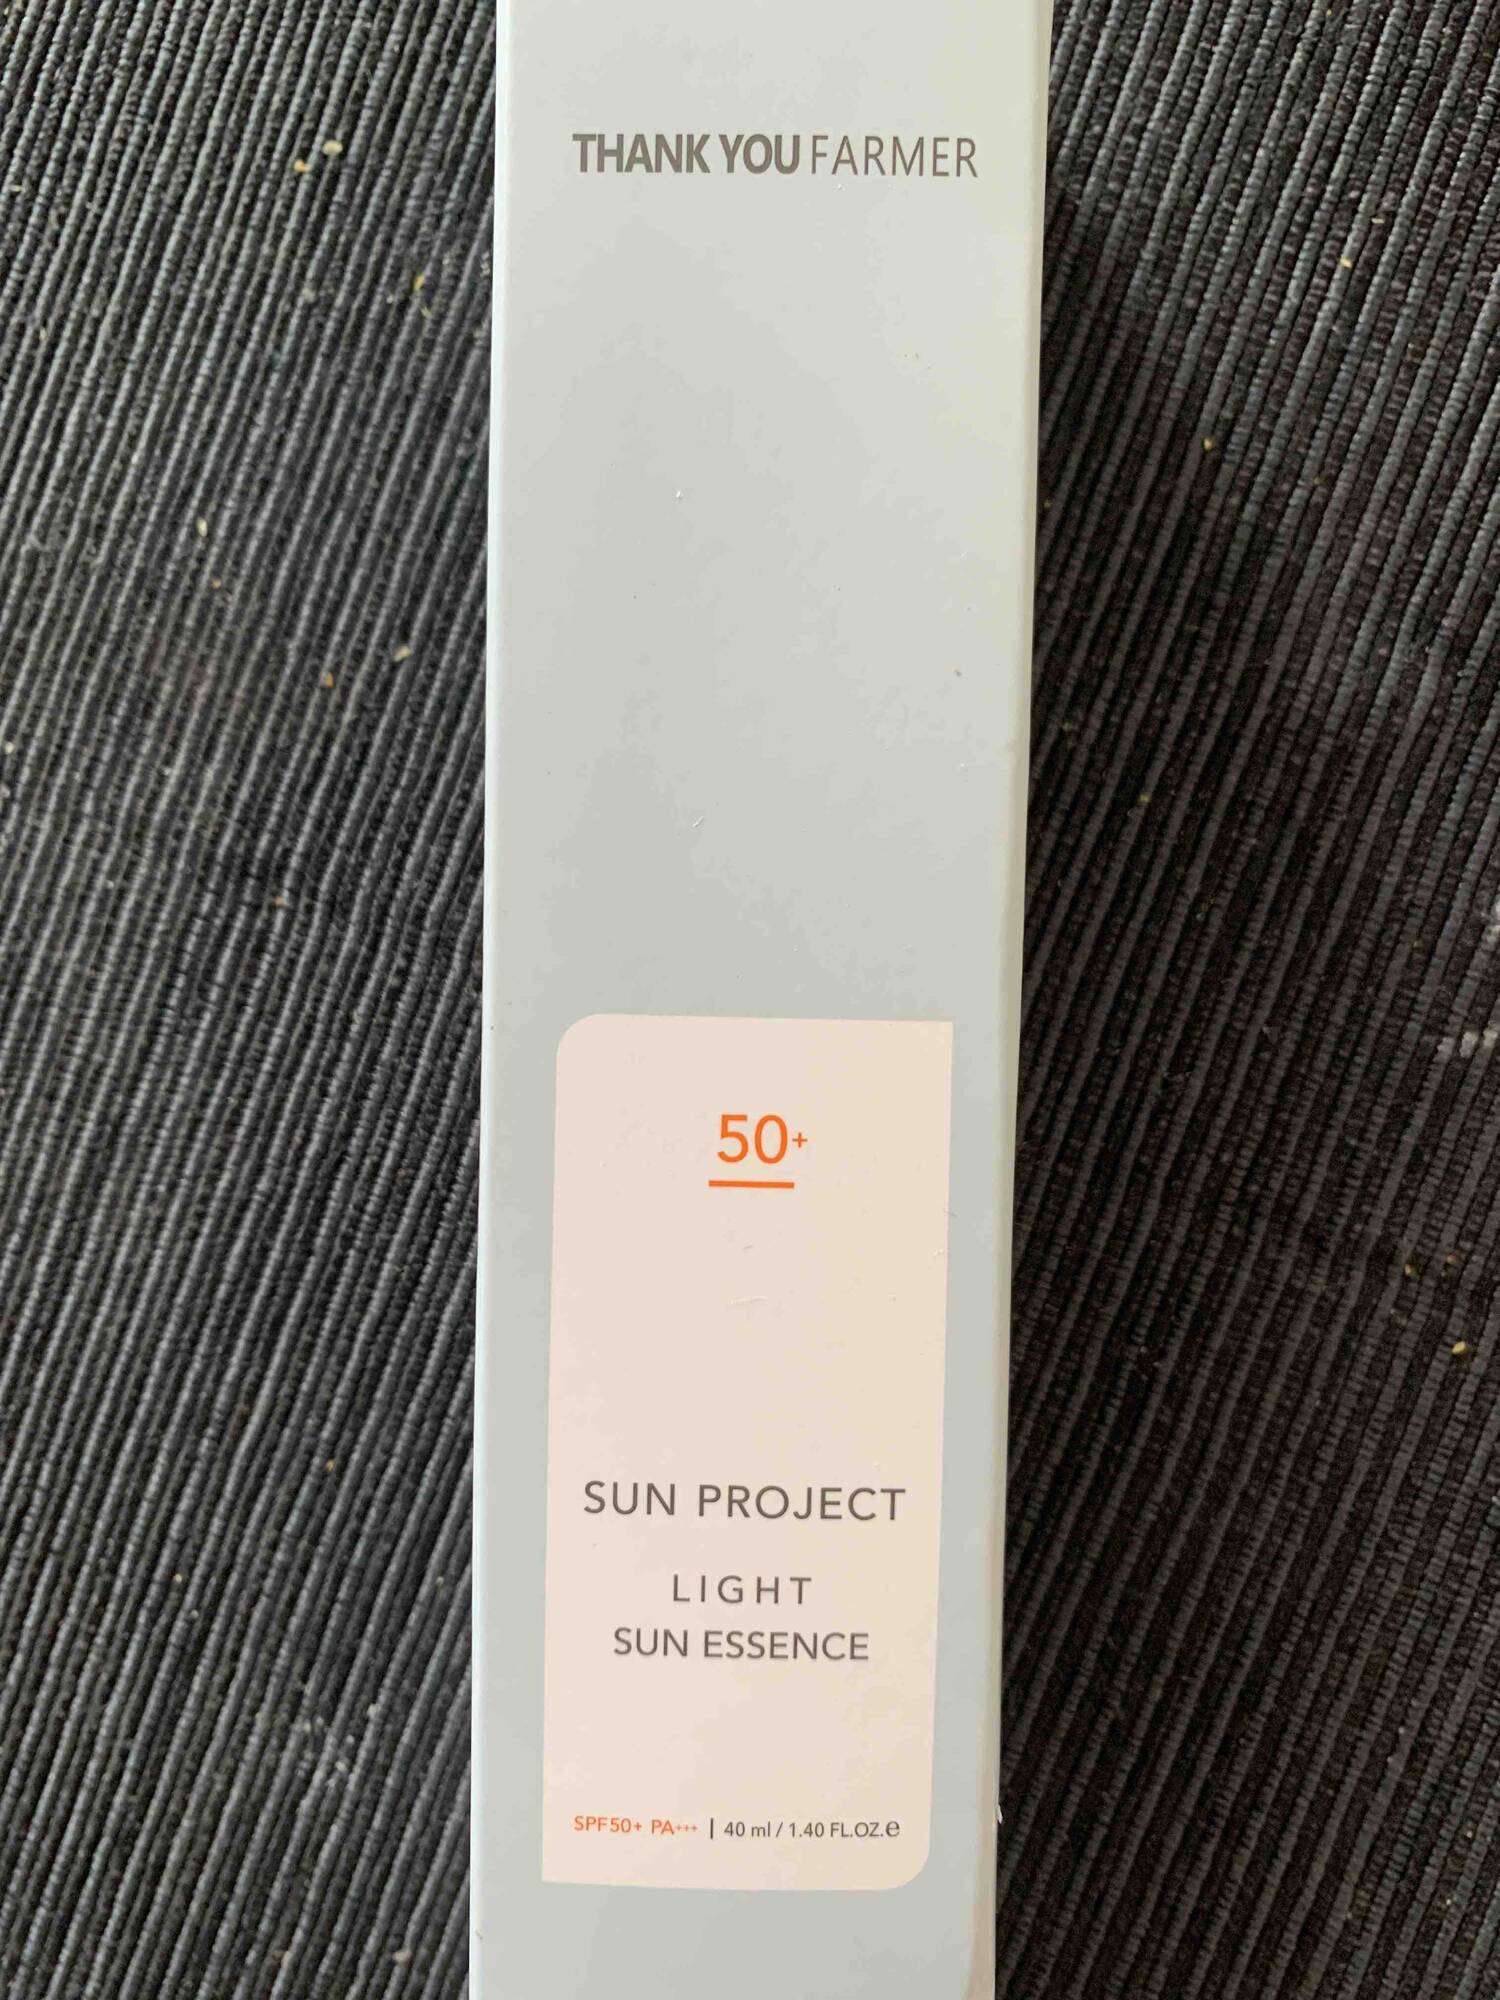 THANK YOU FARMER - Sun project - Light sun essence SPF 50+